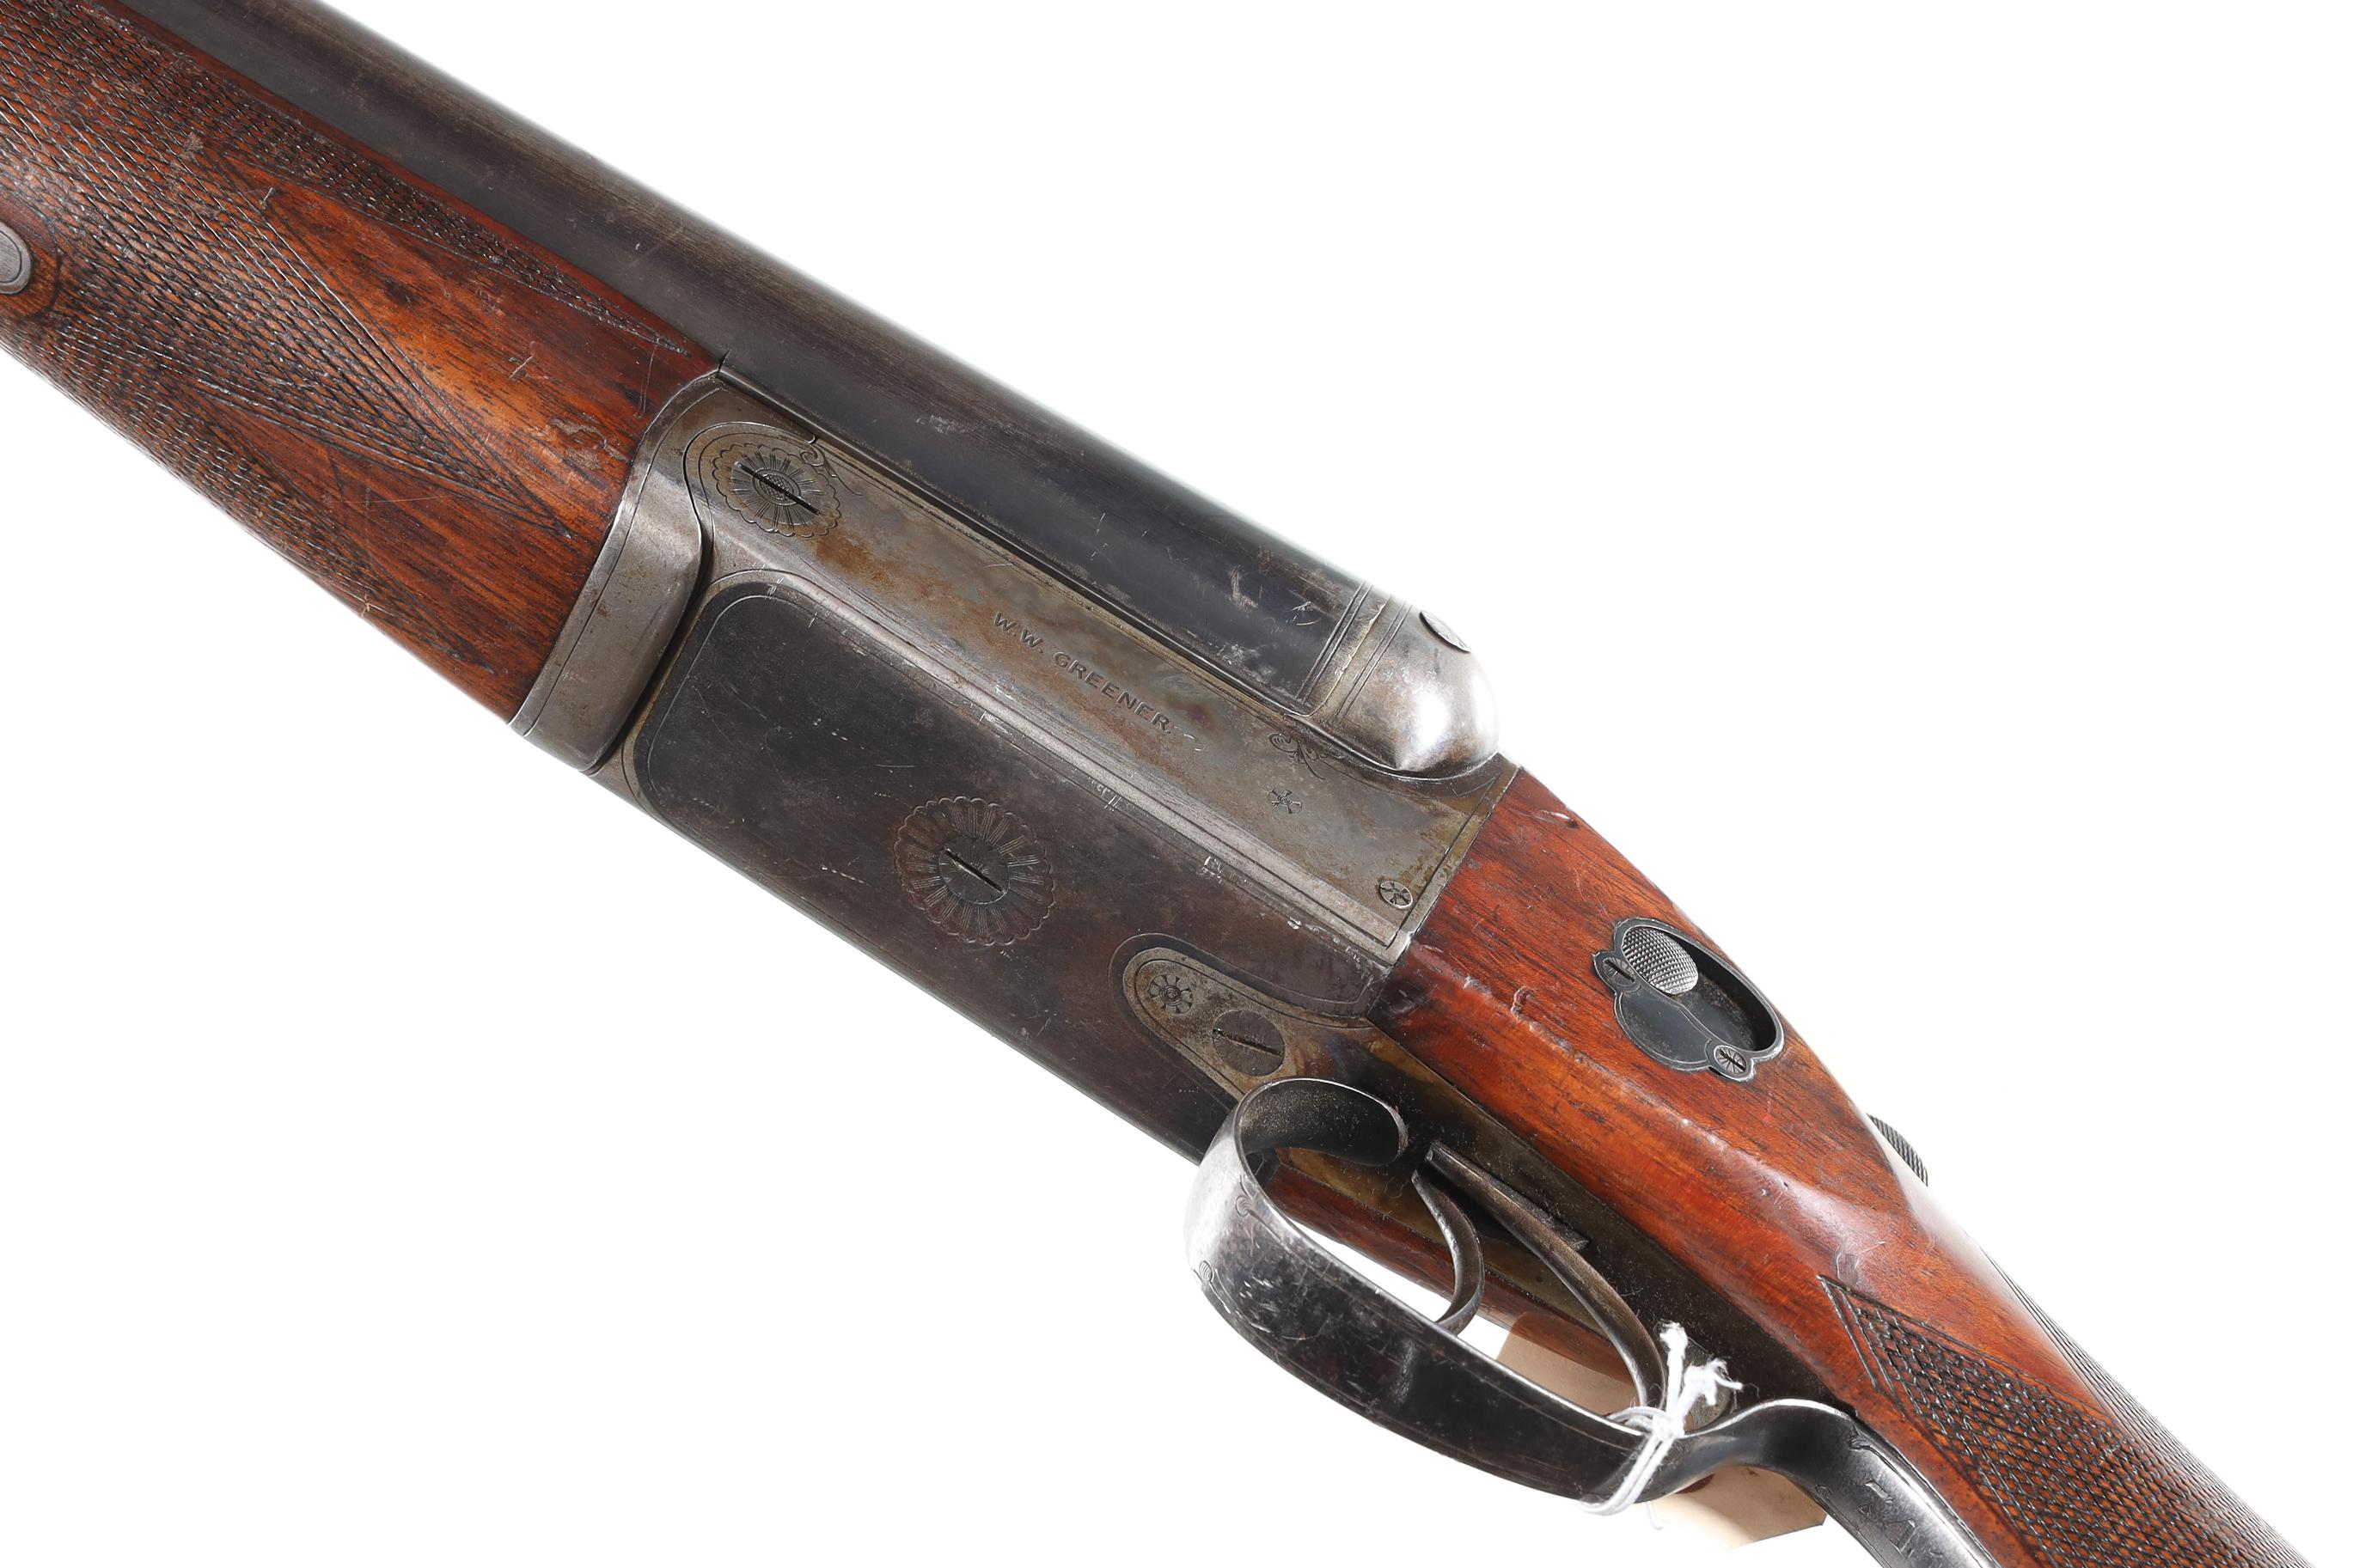 GREENER (W.W.LTD.) BOXLOCK NON-EJECTOR Shotgun 12ga